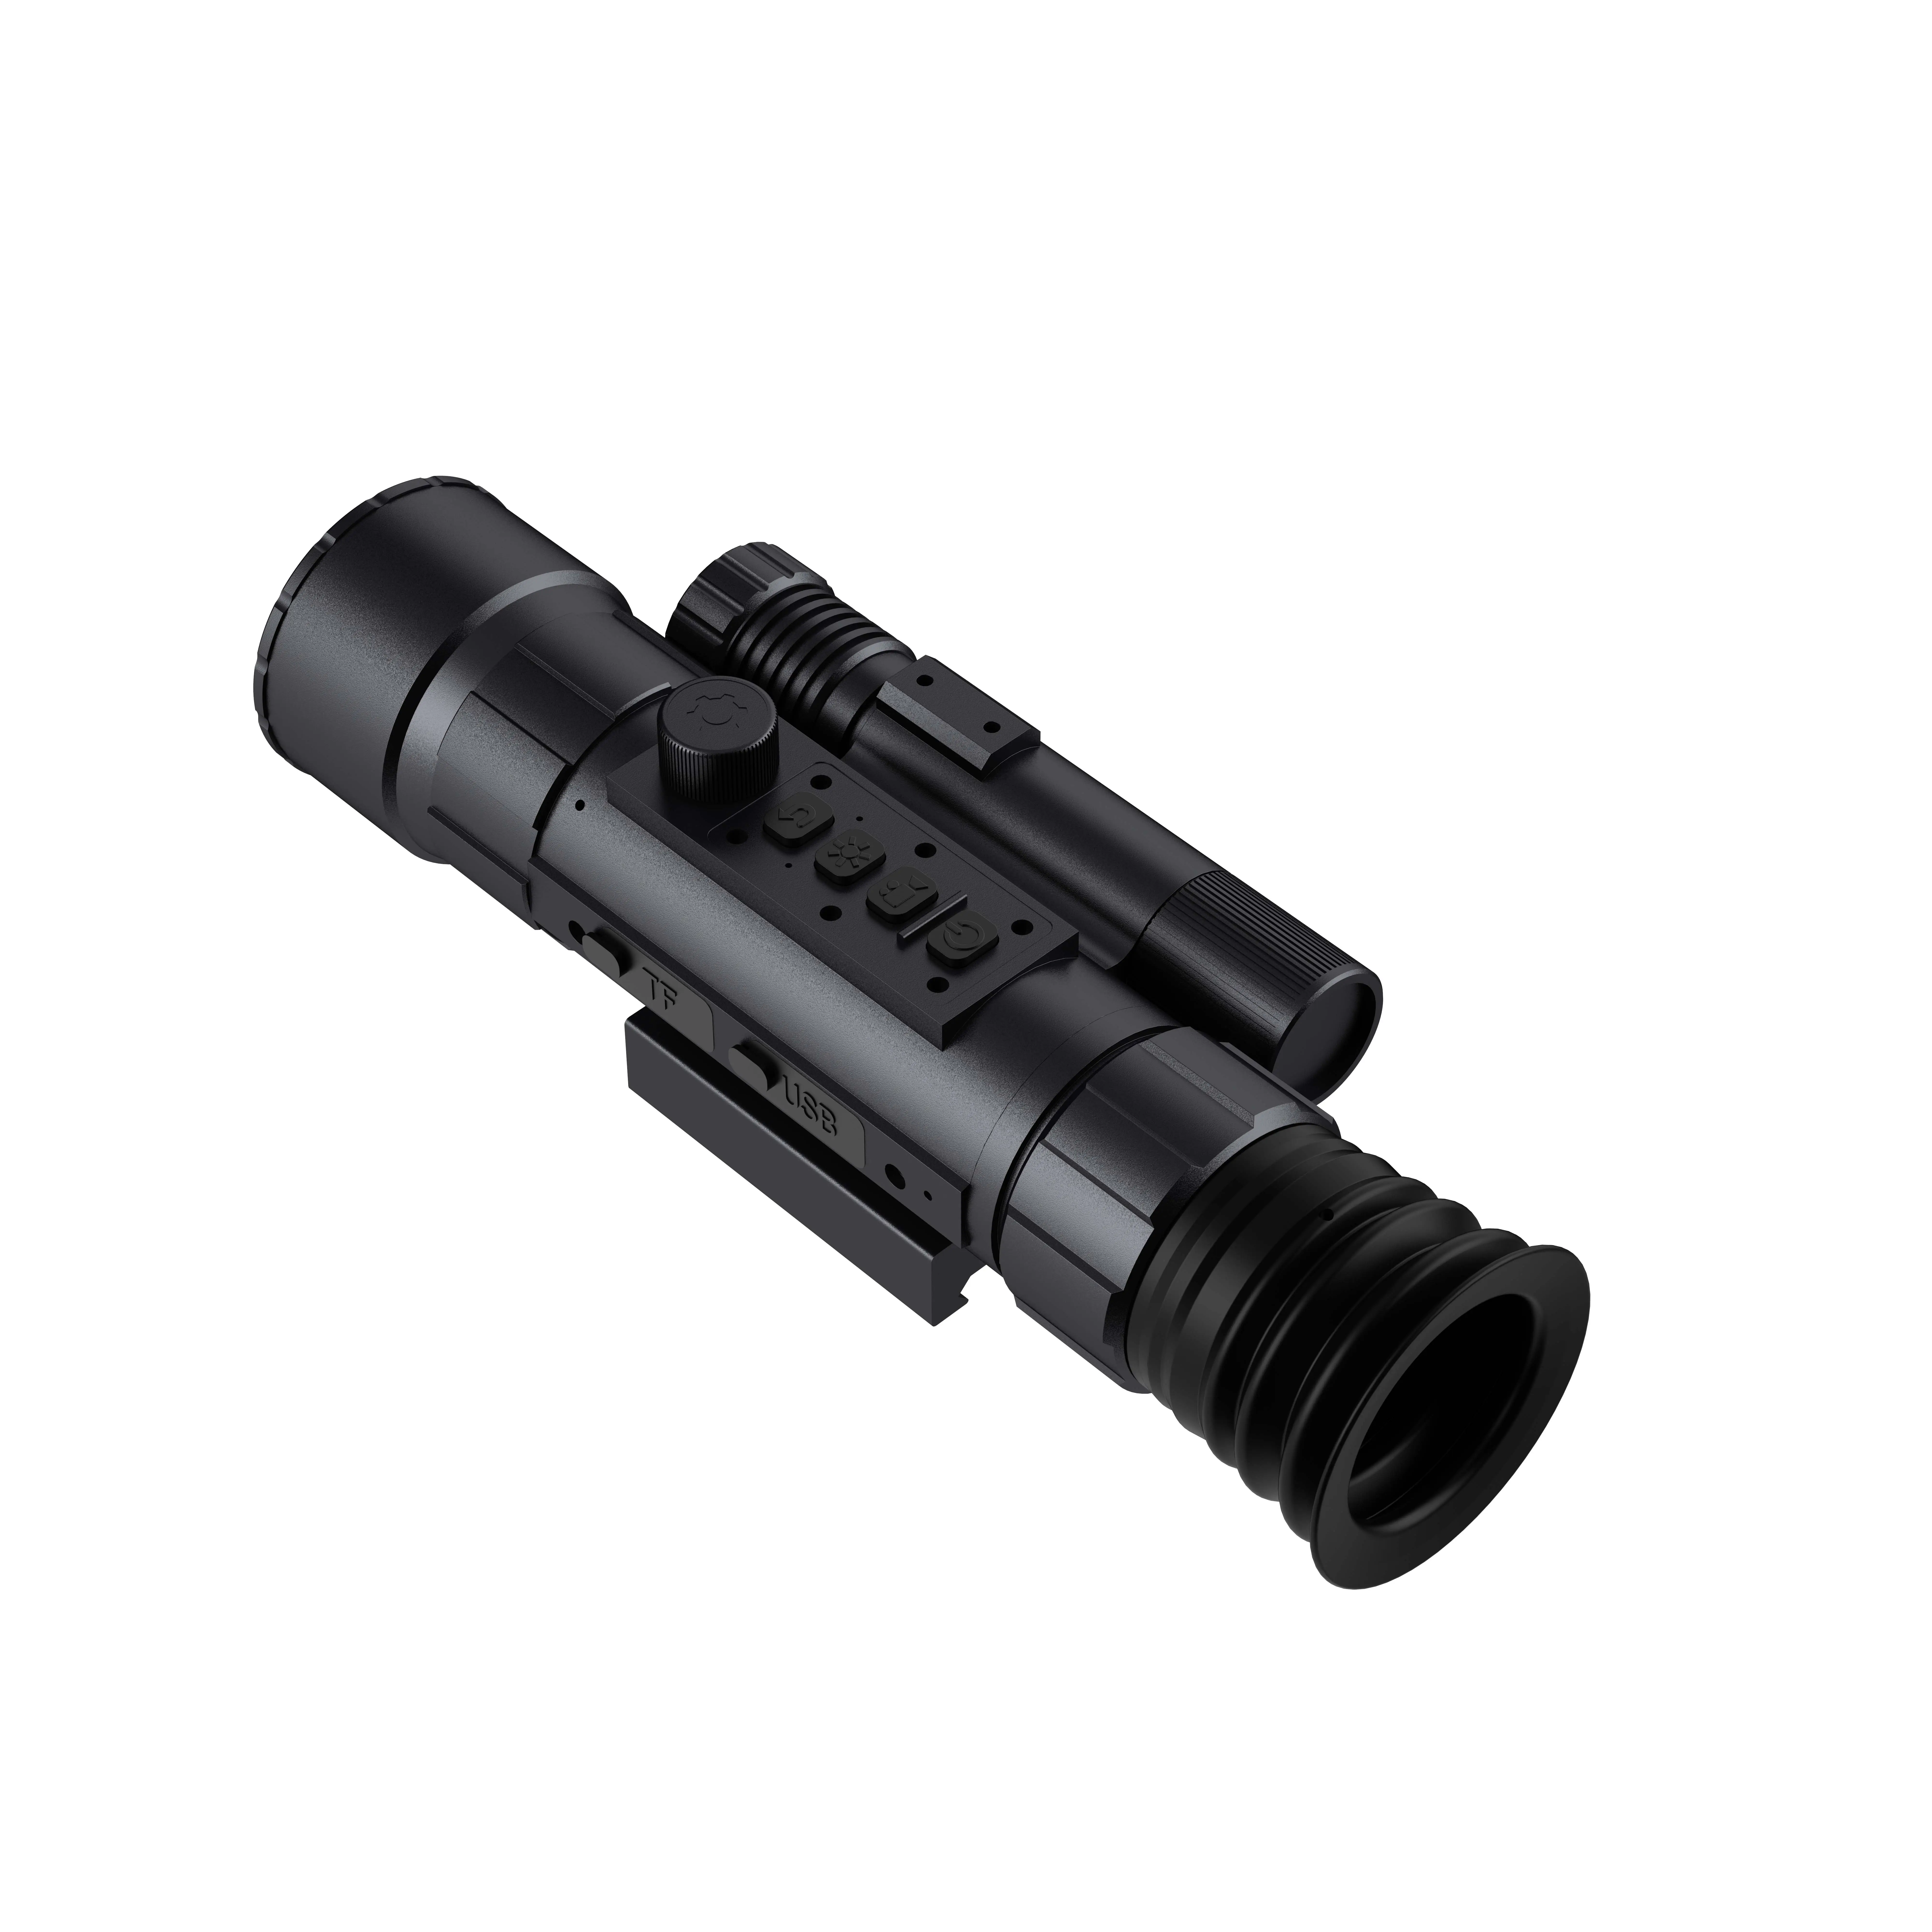 SC01 Night Vision 1080P digital hunting scope tube optic camera